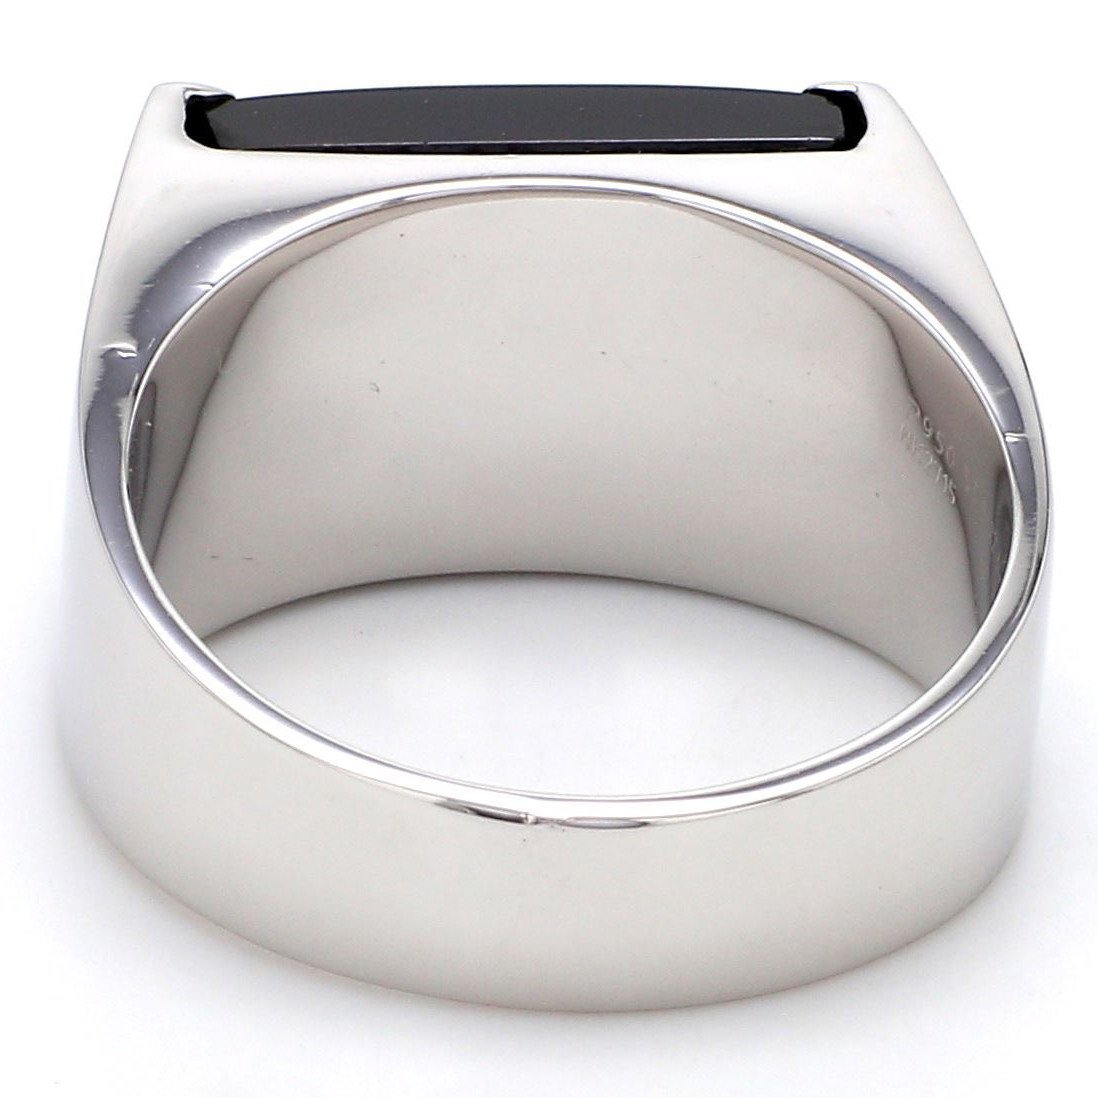 Customised Platinum Ring with Black Stone